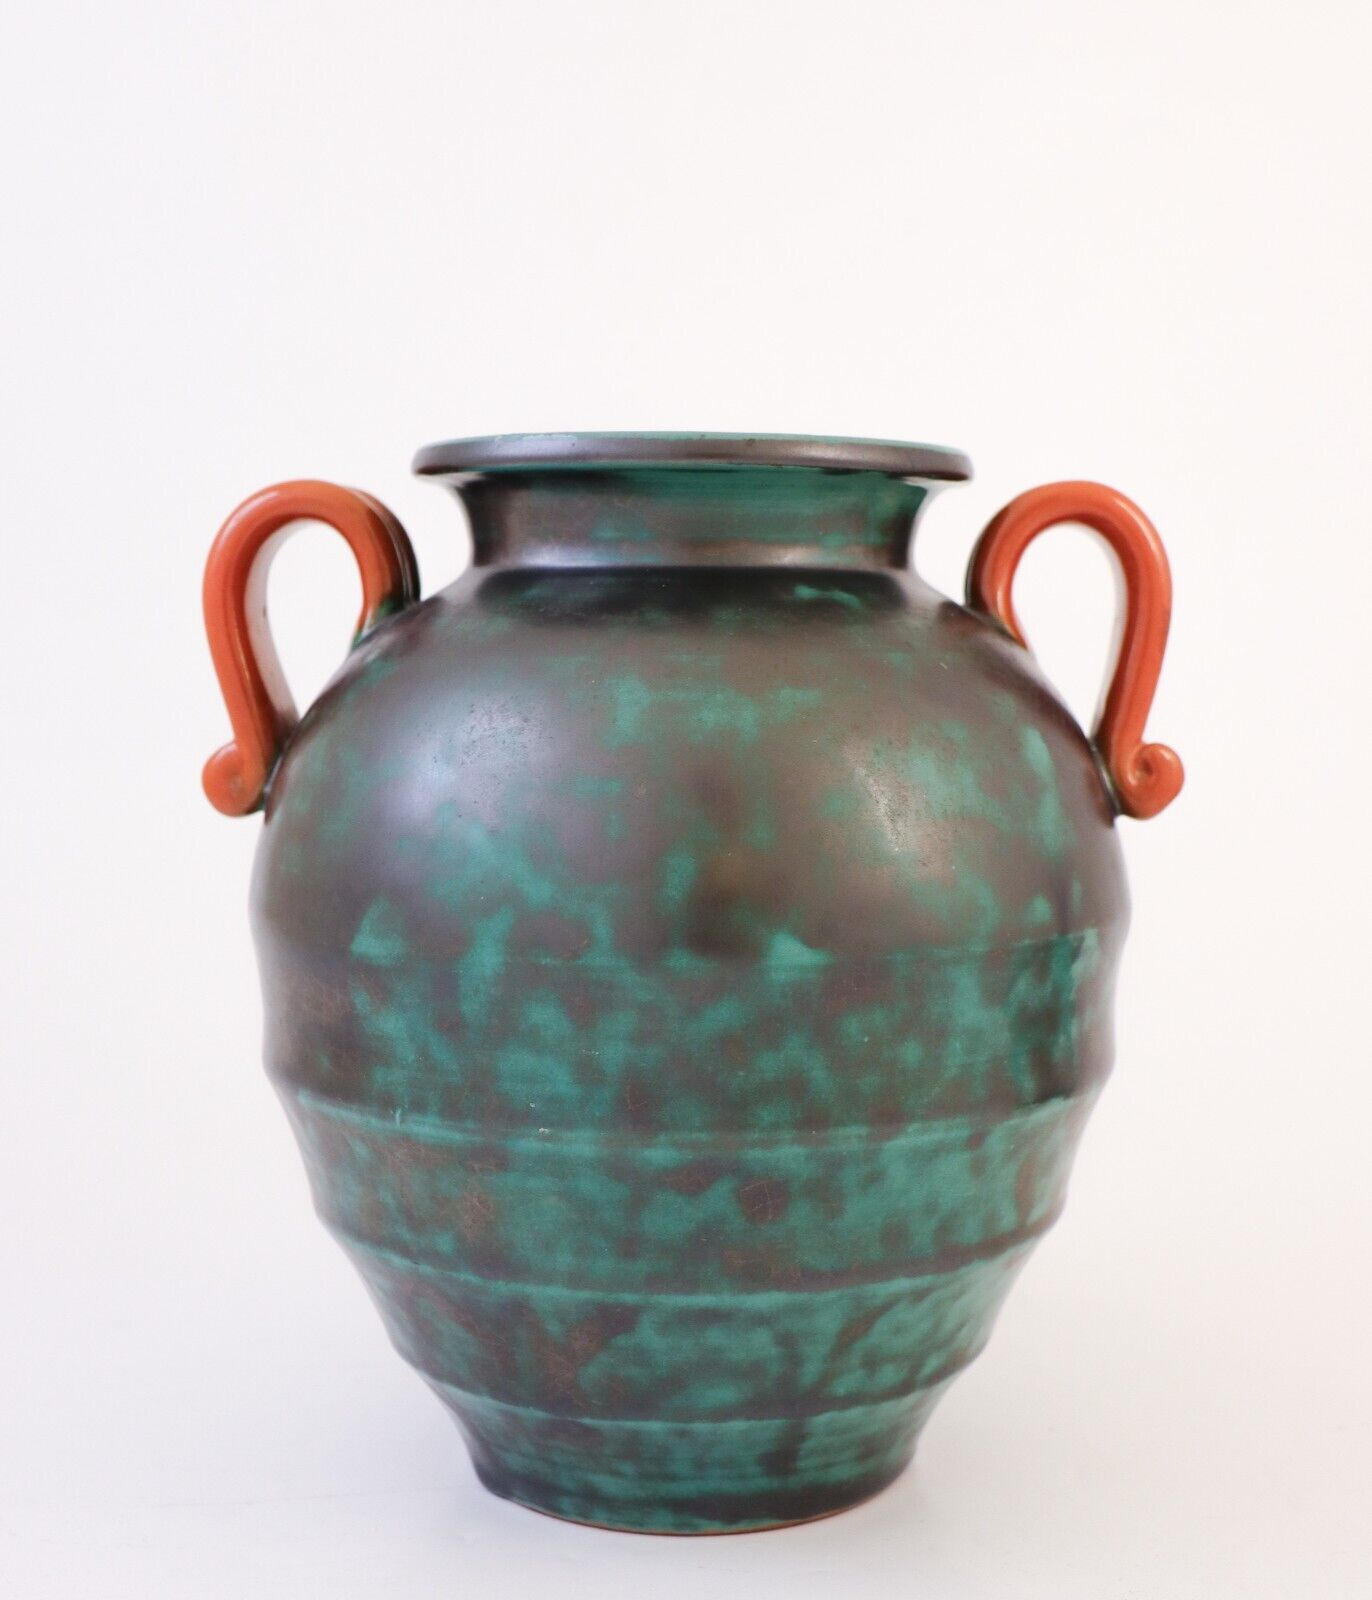 Large Green Vase "Roman Urn" Upsala Ekeby - Harald Östergren - 1930s Art Deco